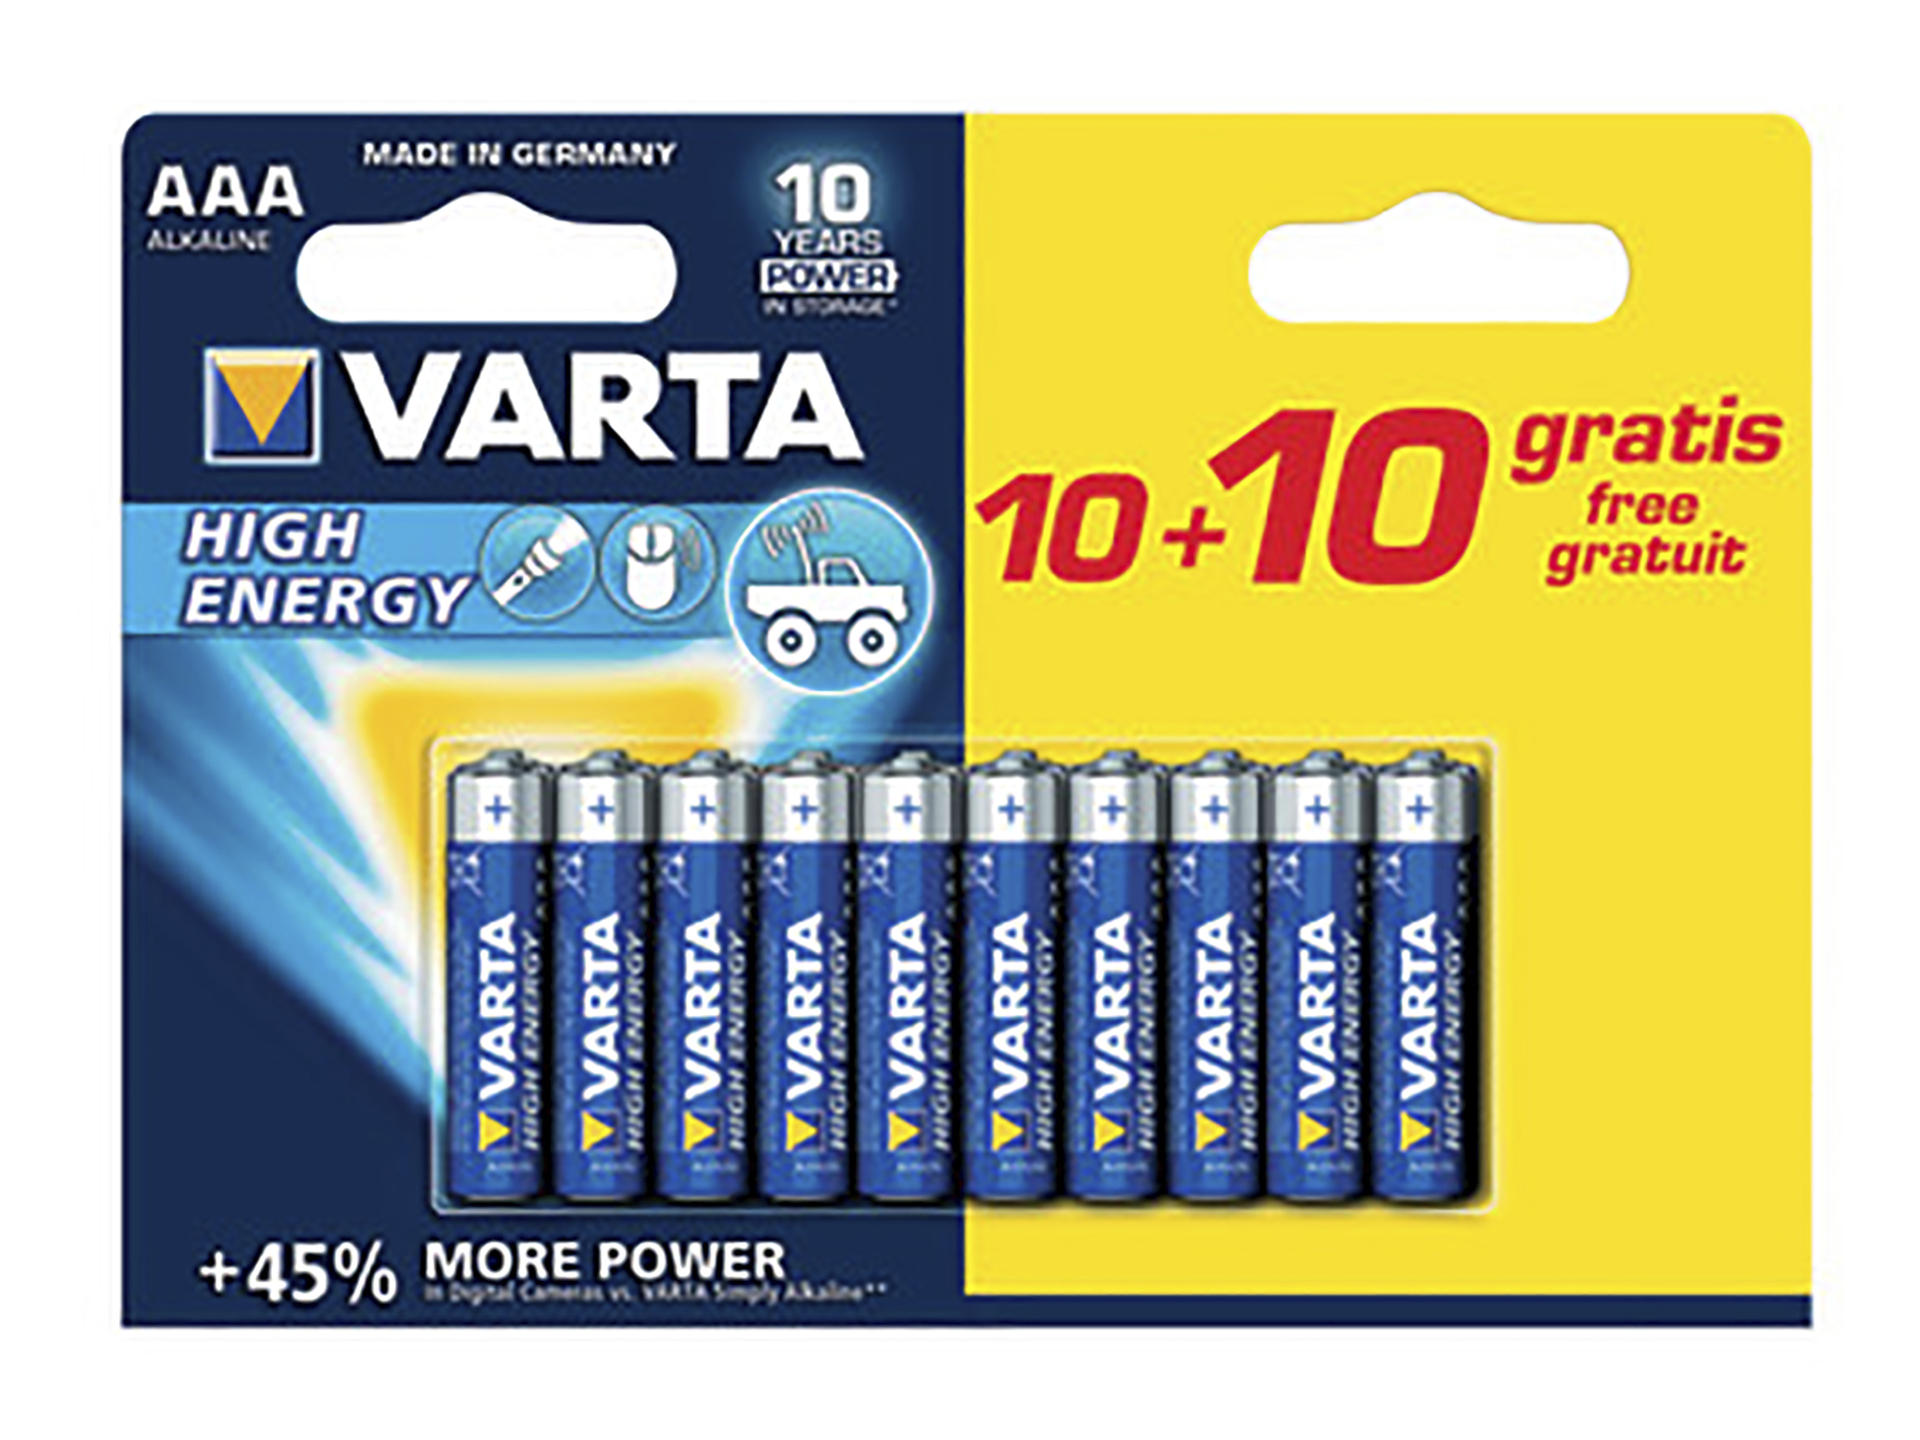 Varta Pila Alcalina Stilografica High Energy Free 20Aaa – Varta Batterie